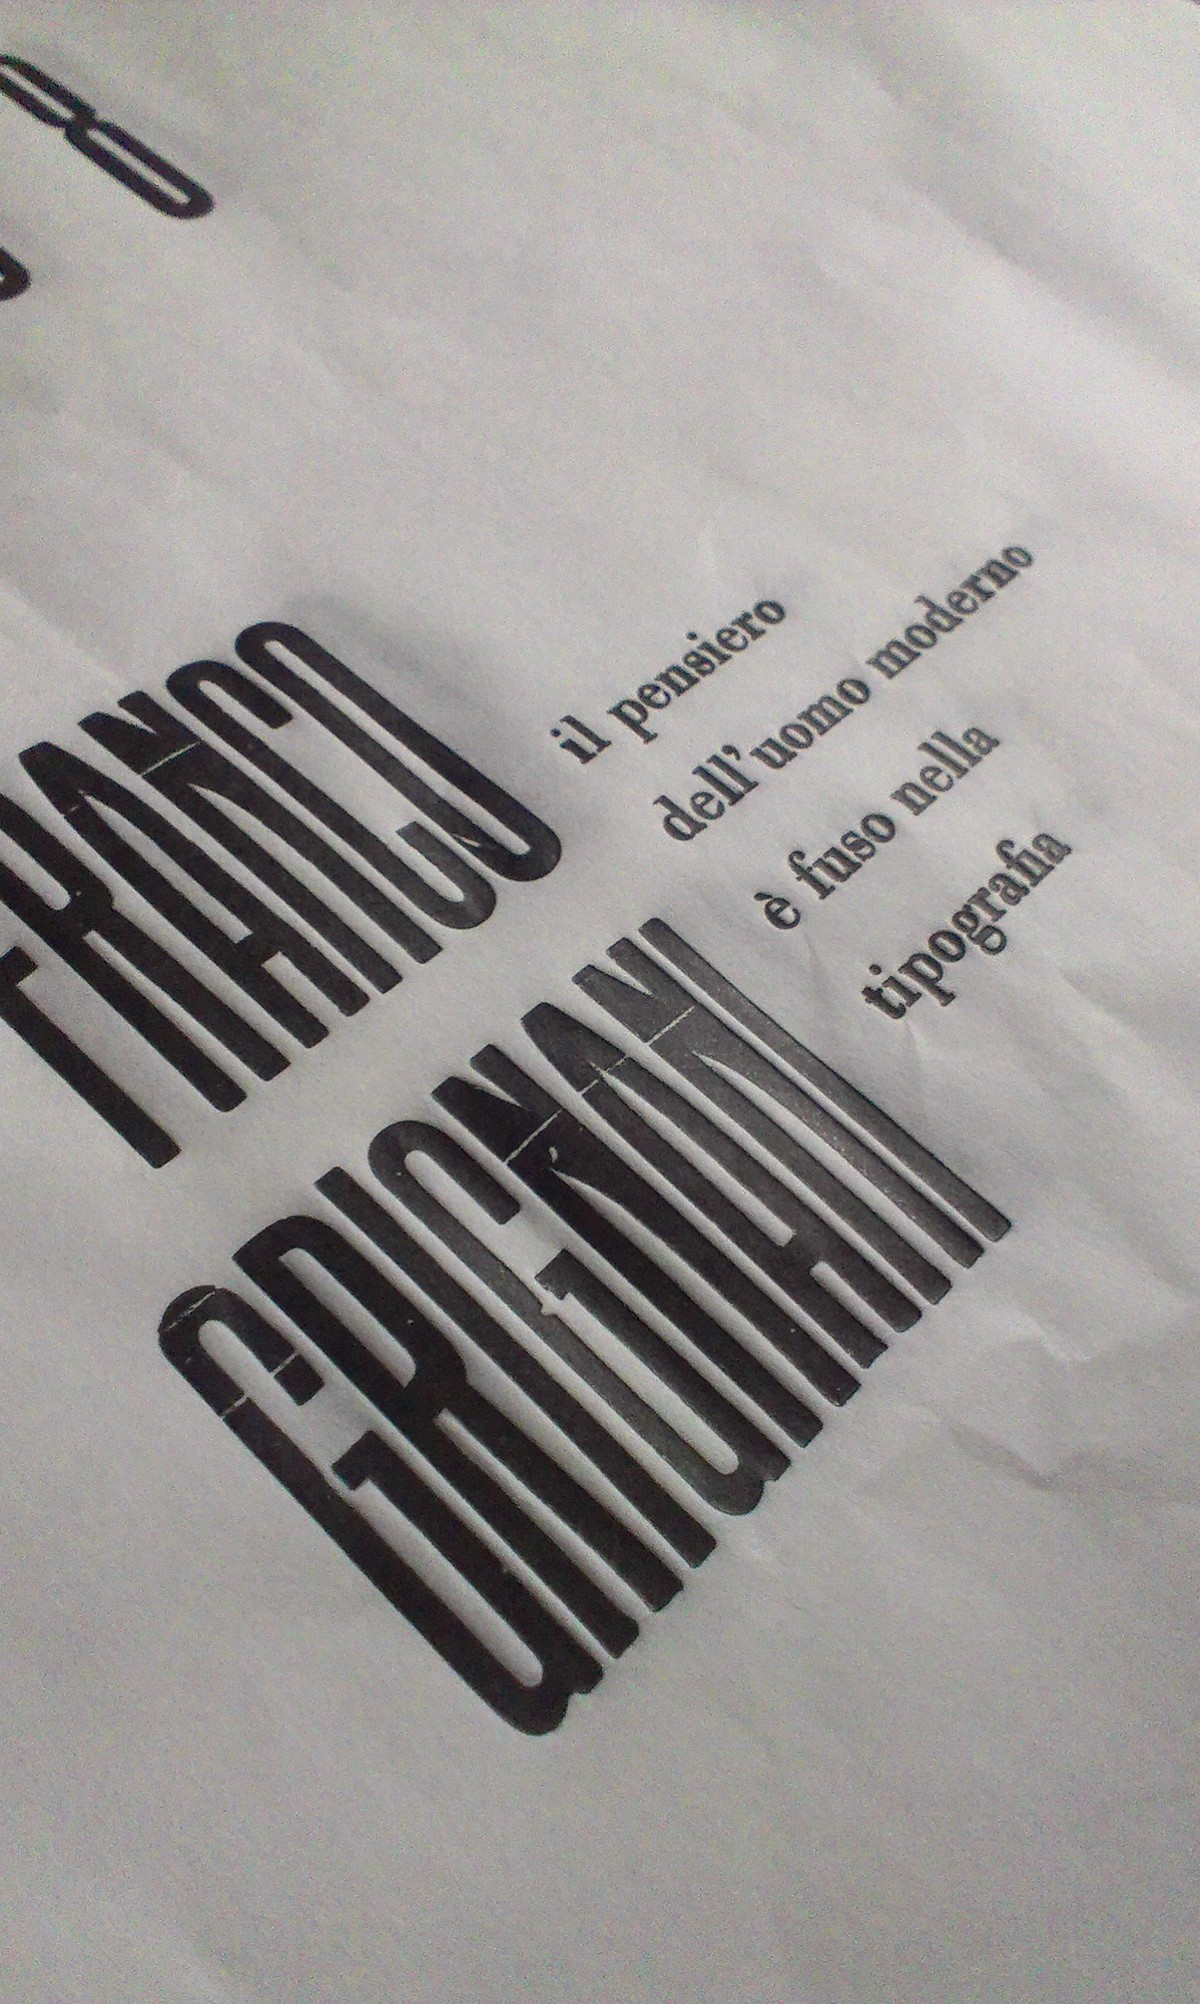 vignelli lora lamm grignani Steiner Monguzzi tschichold hochuli fronzoni silkscreen letterpress publishing   craft tribute poster urbino